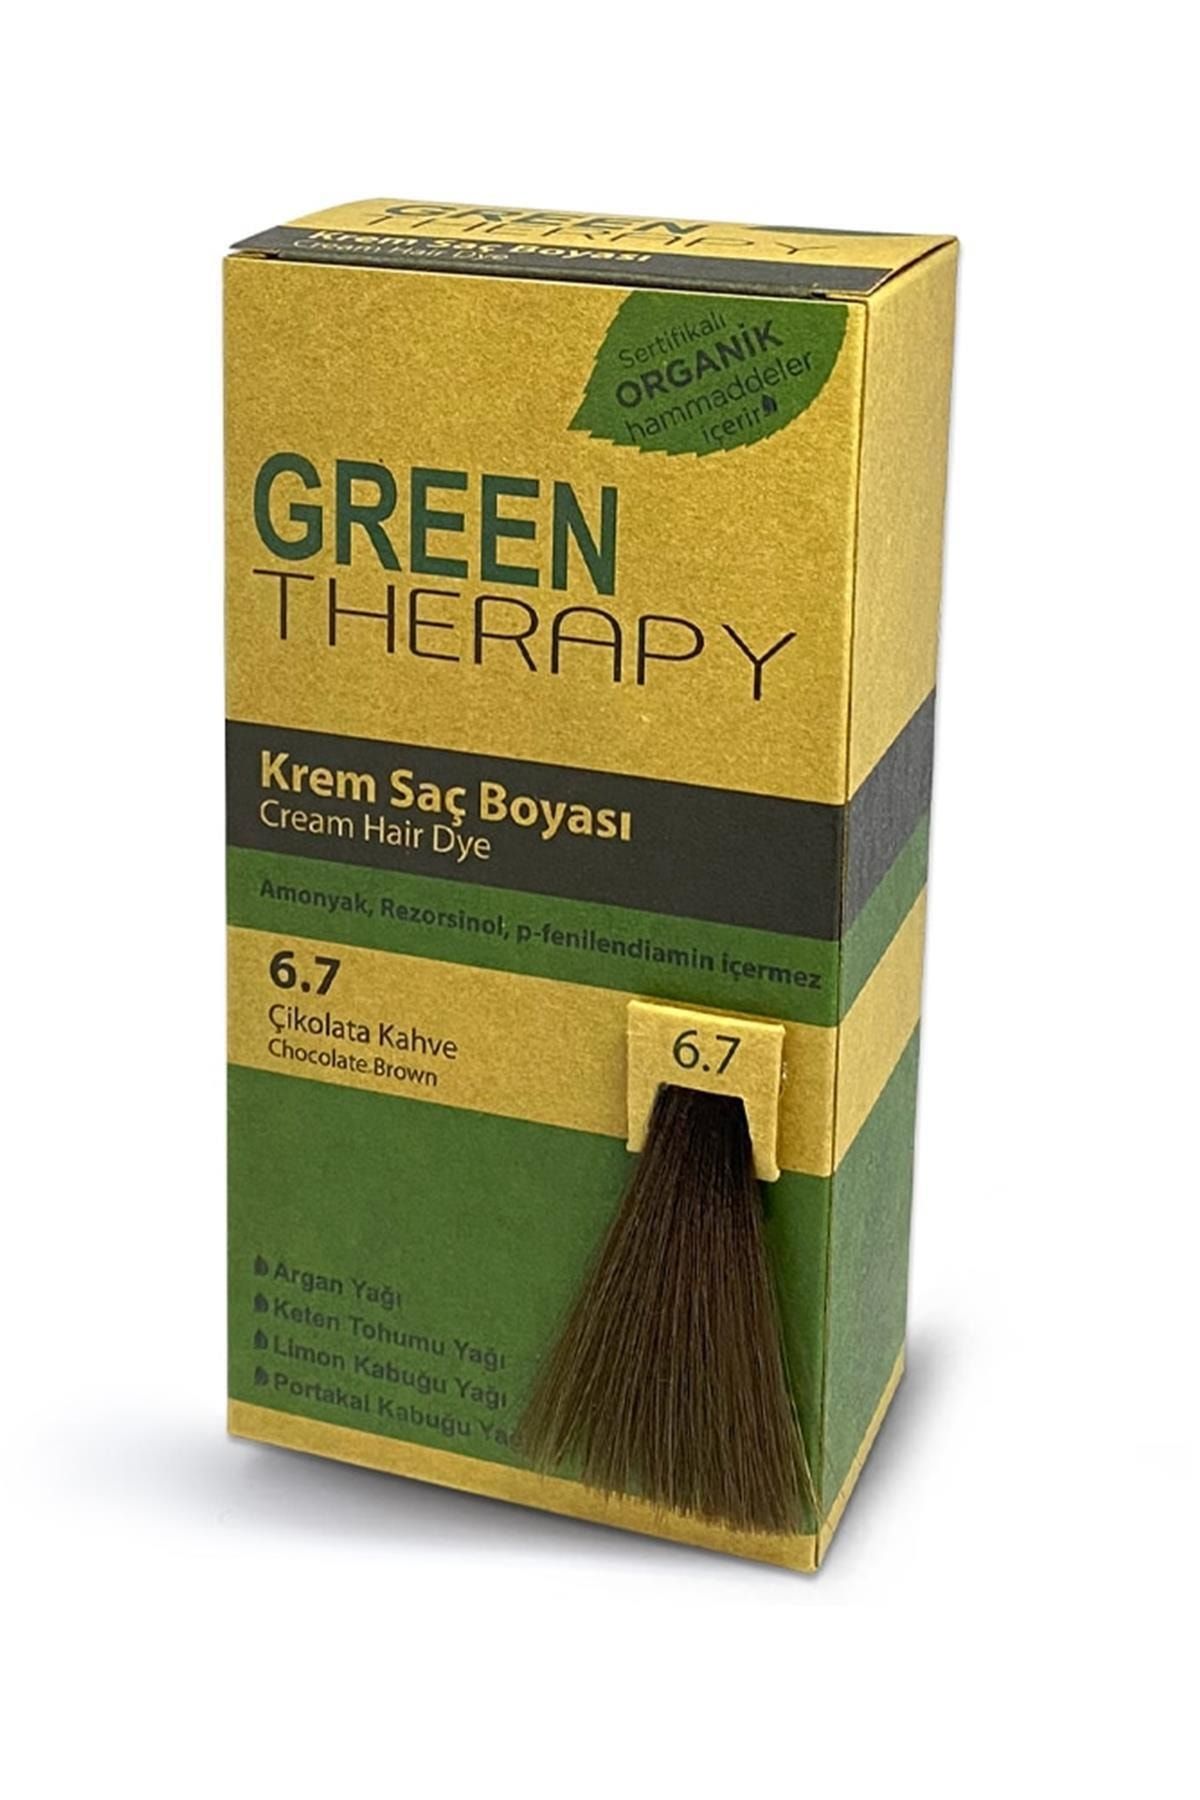 Green Therapy Marka: Krem Saç Boyası 6.7 Çikolata Kahve Kategori: Saç Boyası